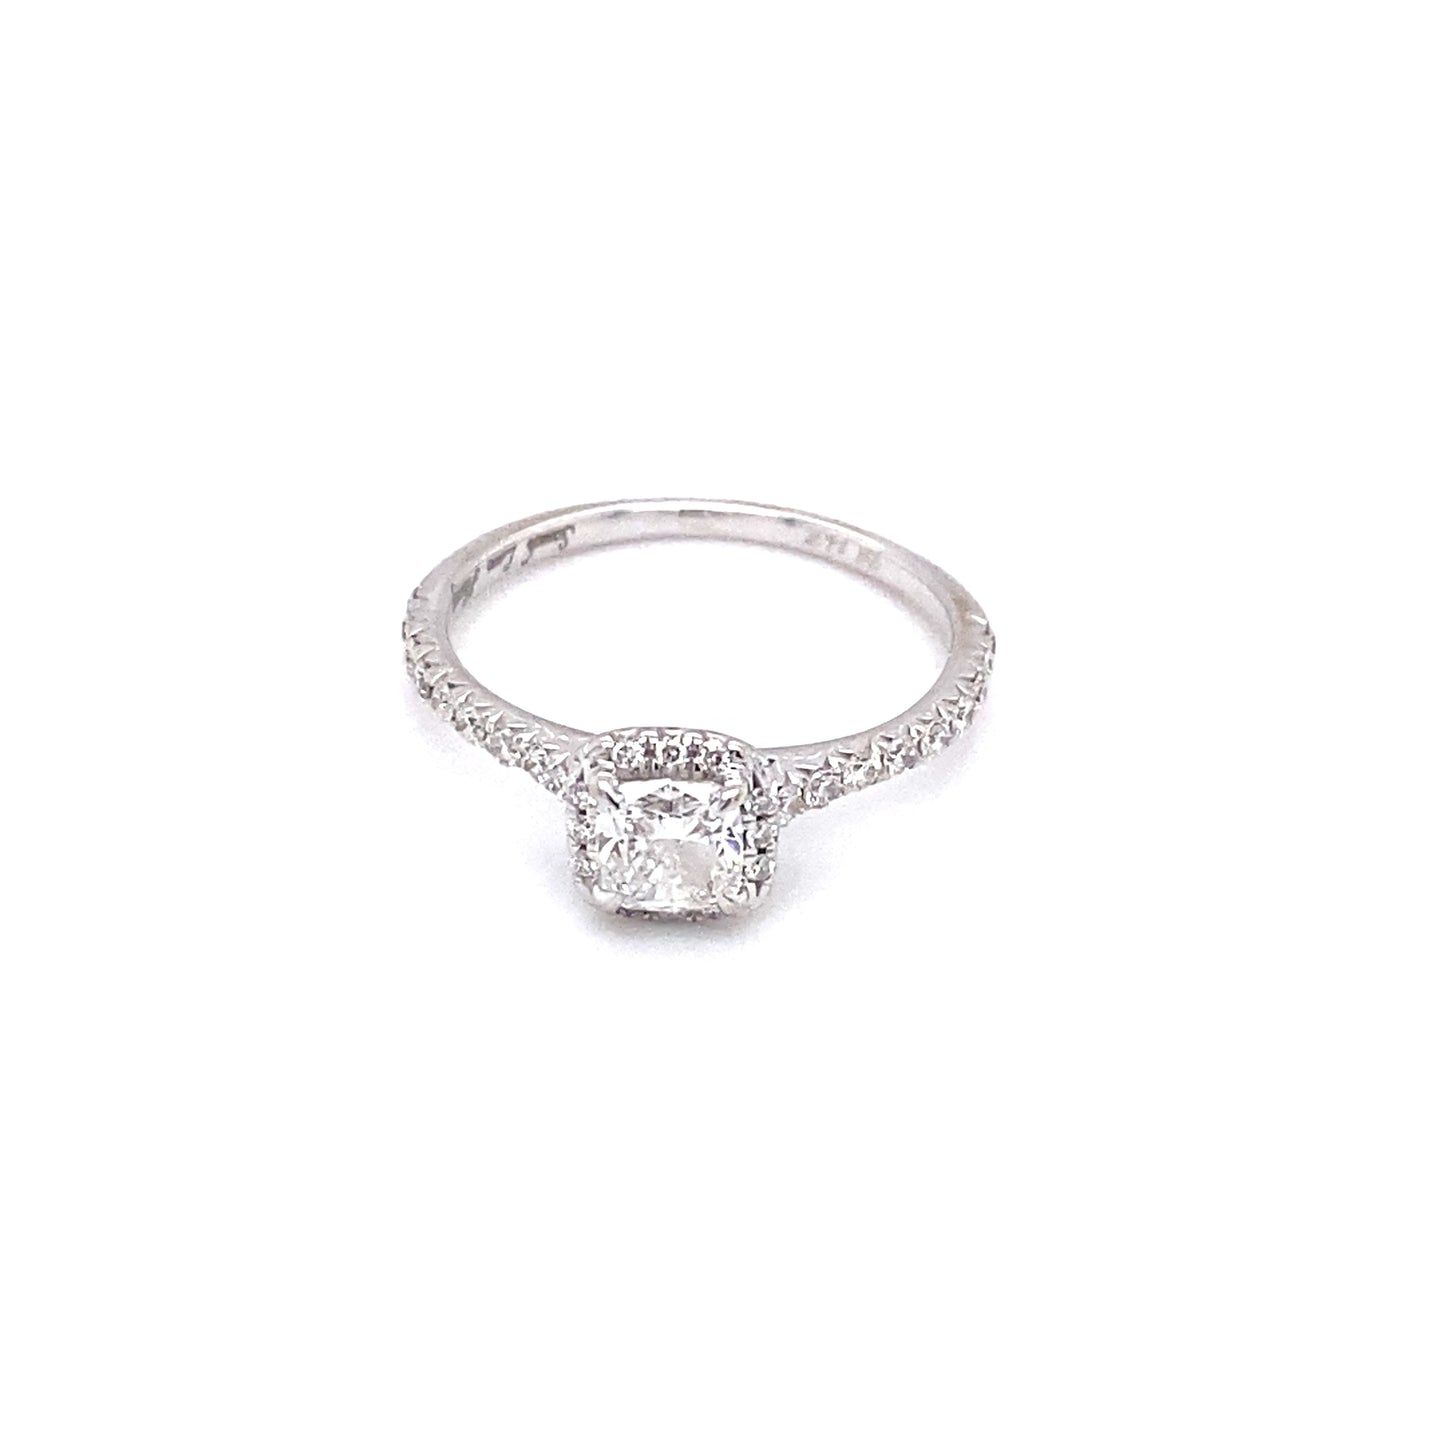 Circa 1990s 0.50ct Cushion Cut Diamond Halo Engagement Ring in 14K White Gold